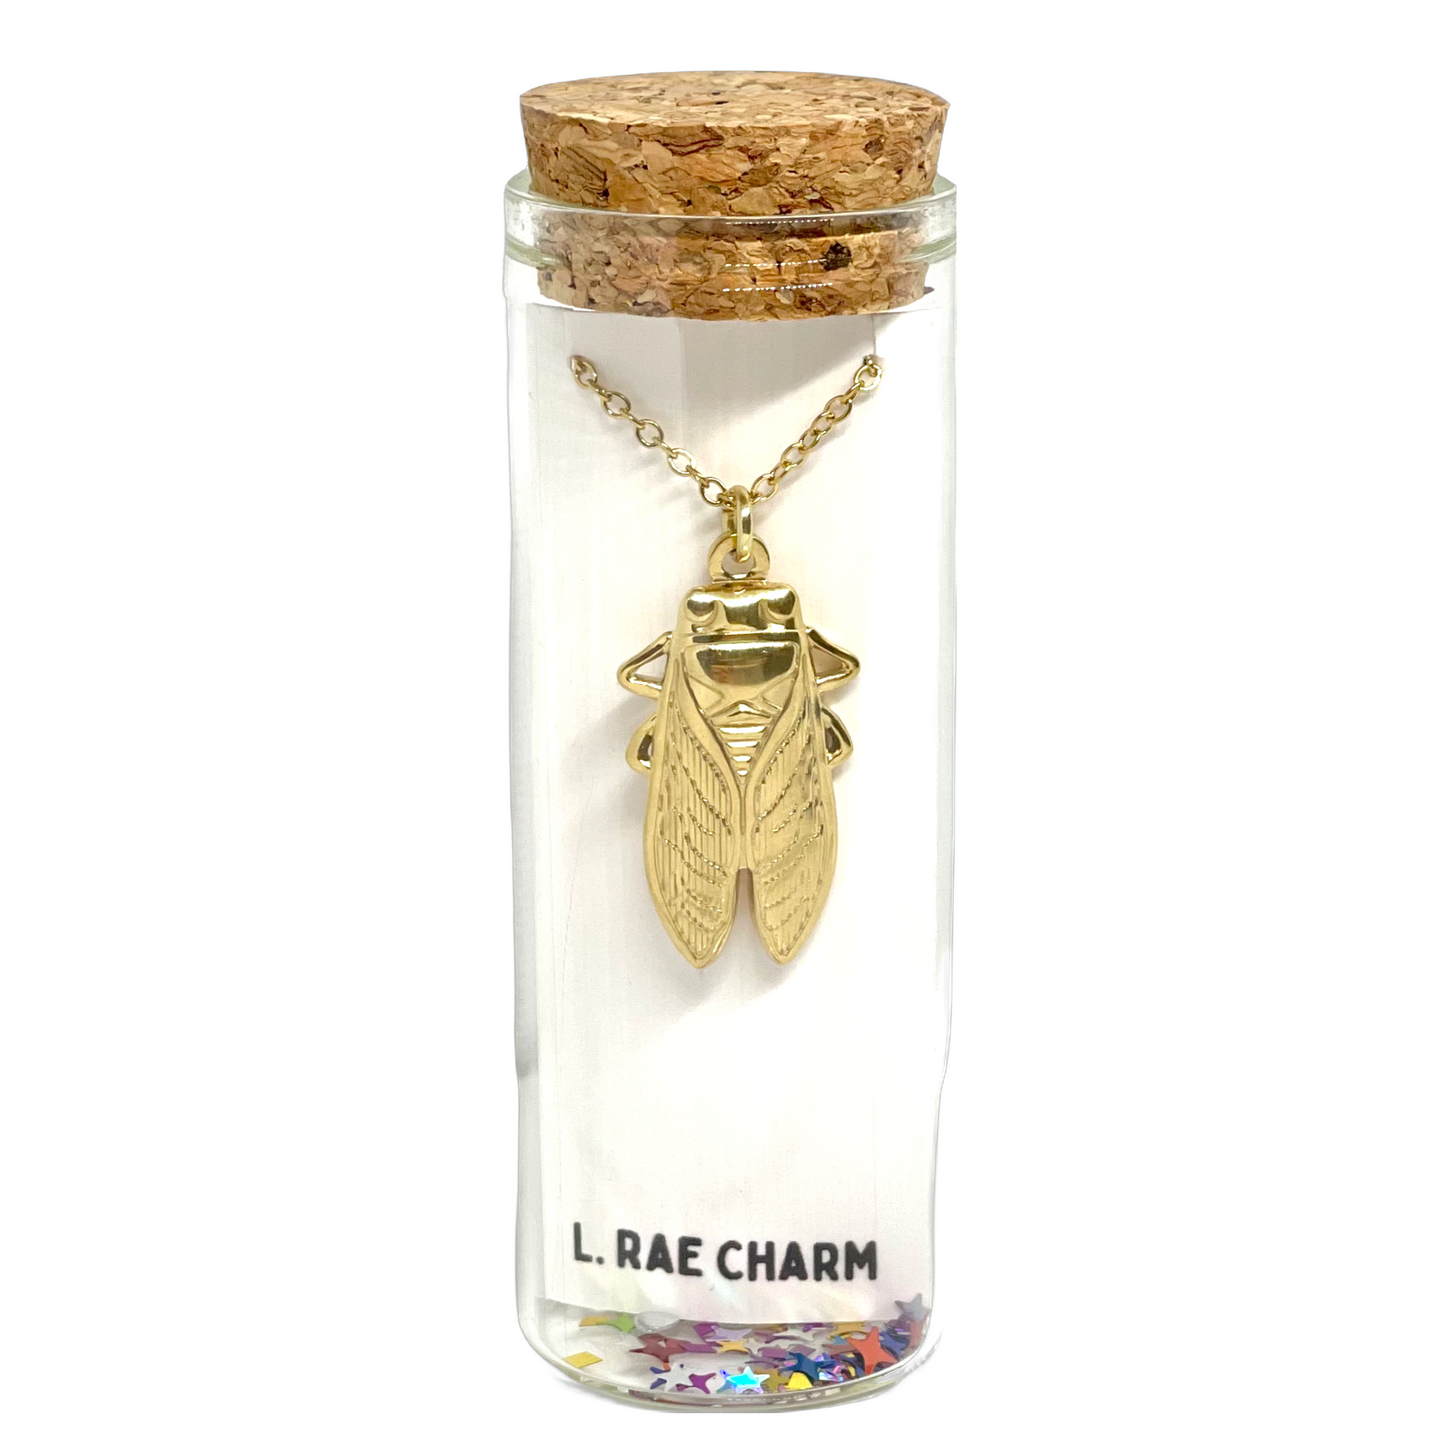 Cicada Bug Necklace - Gold, Silver, Rainbow